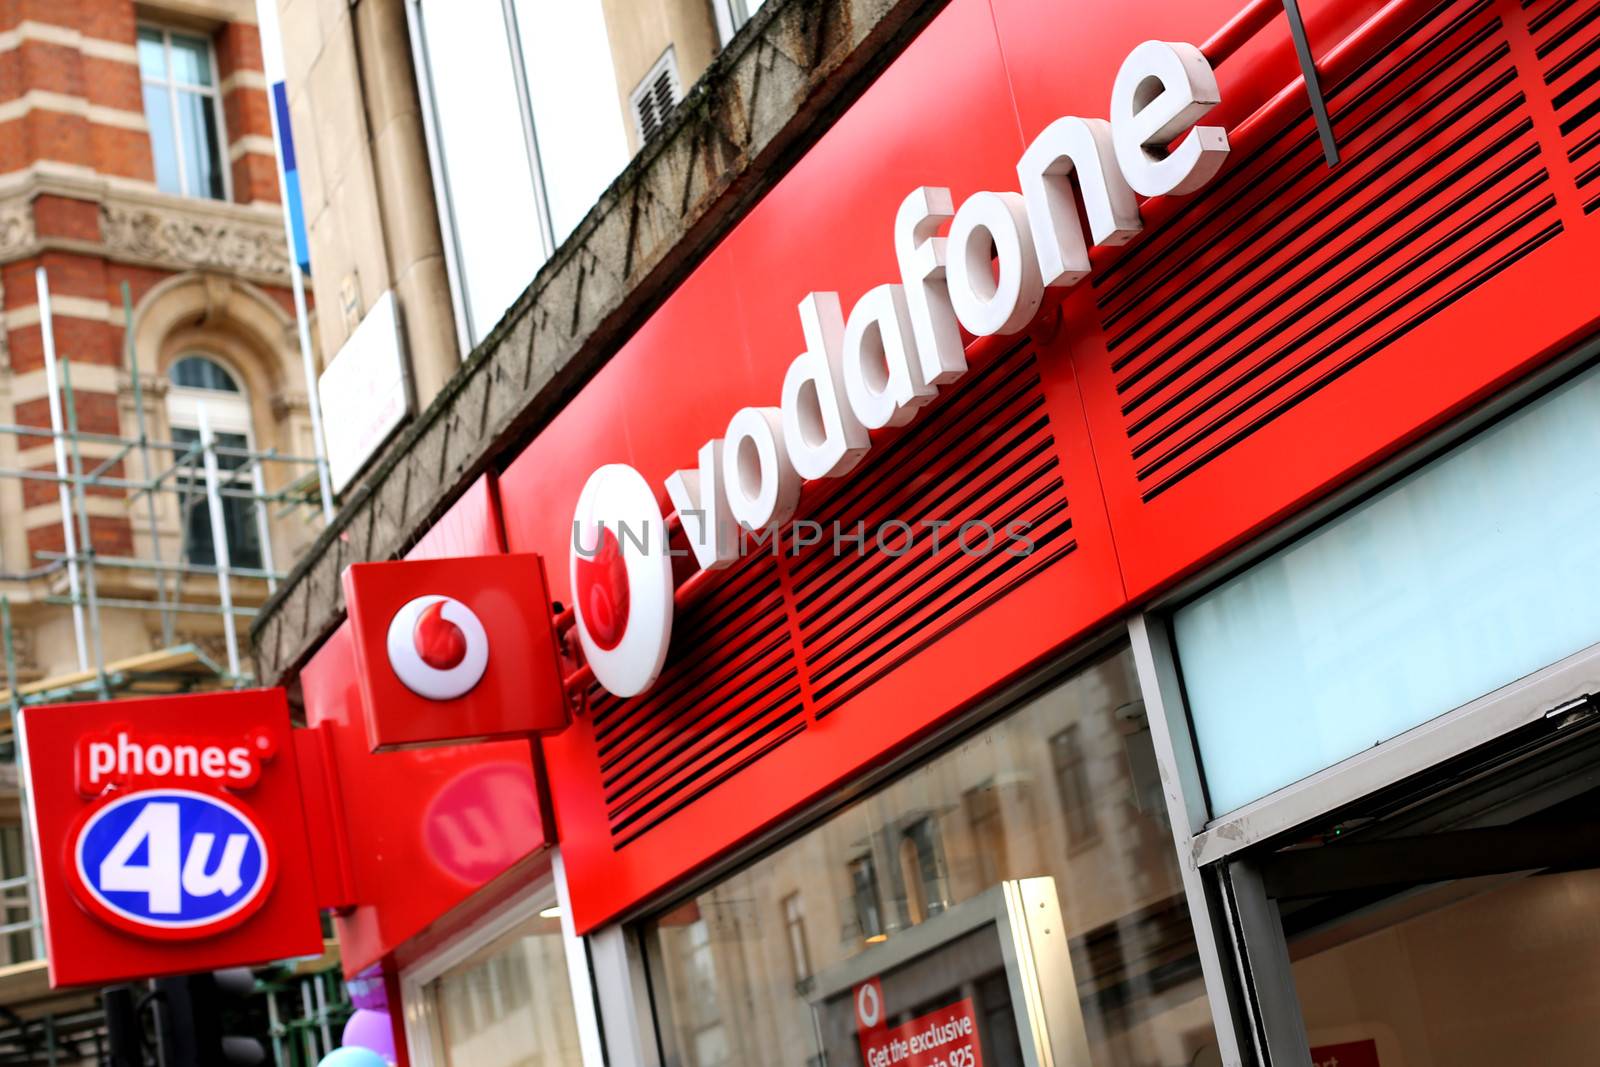 Vodafone Shop sign Oxford Street London by Whiteboxmedia